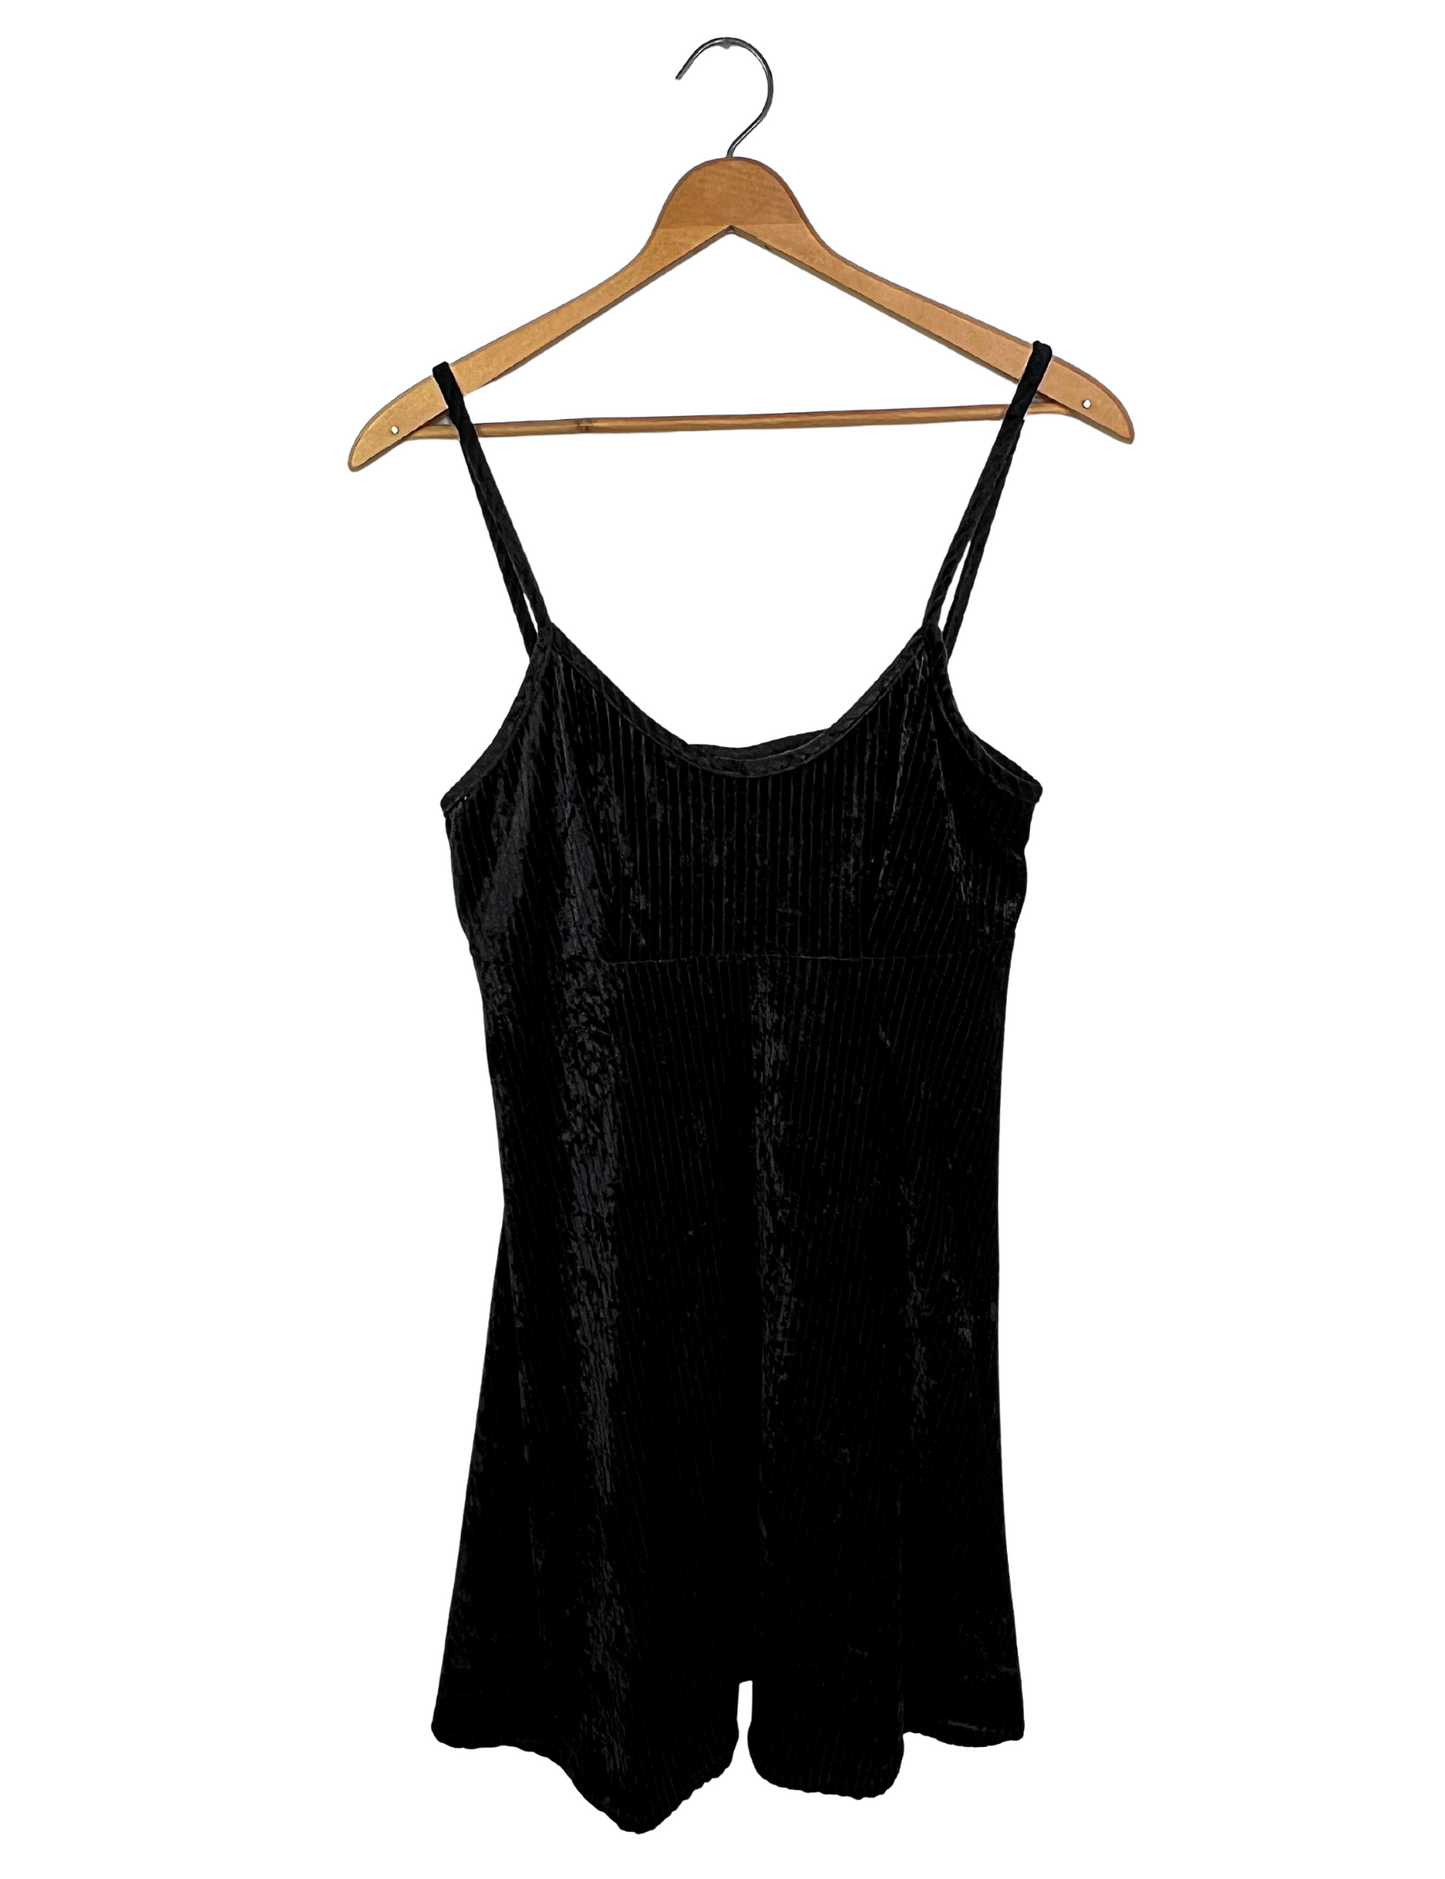 90’s Black Corduroy Spaghetti Strap Grunge Dress Size S/M